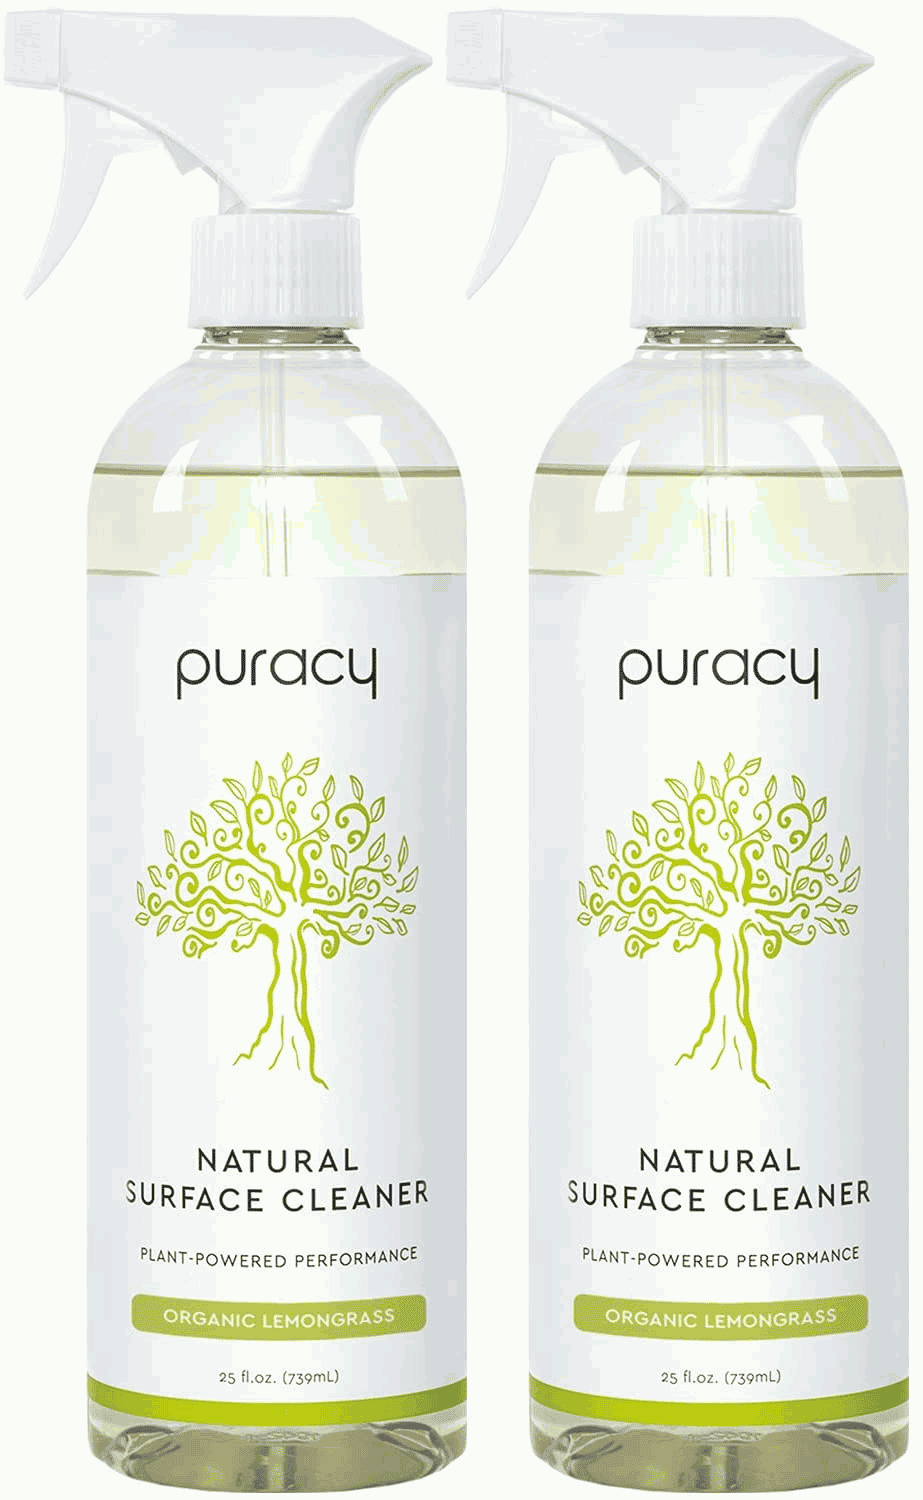 Puracy Organic Natural Bathtub Cleaner